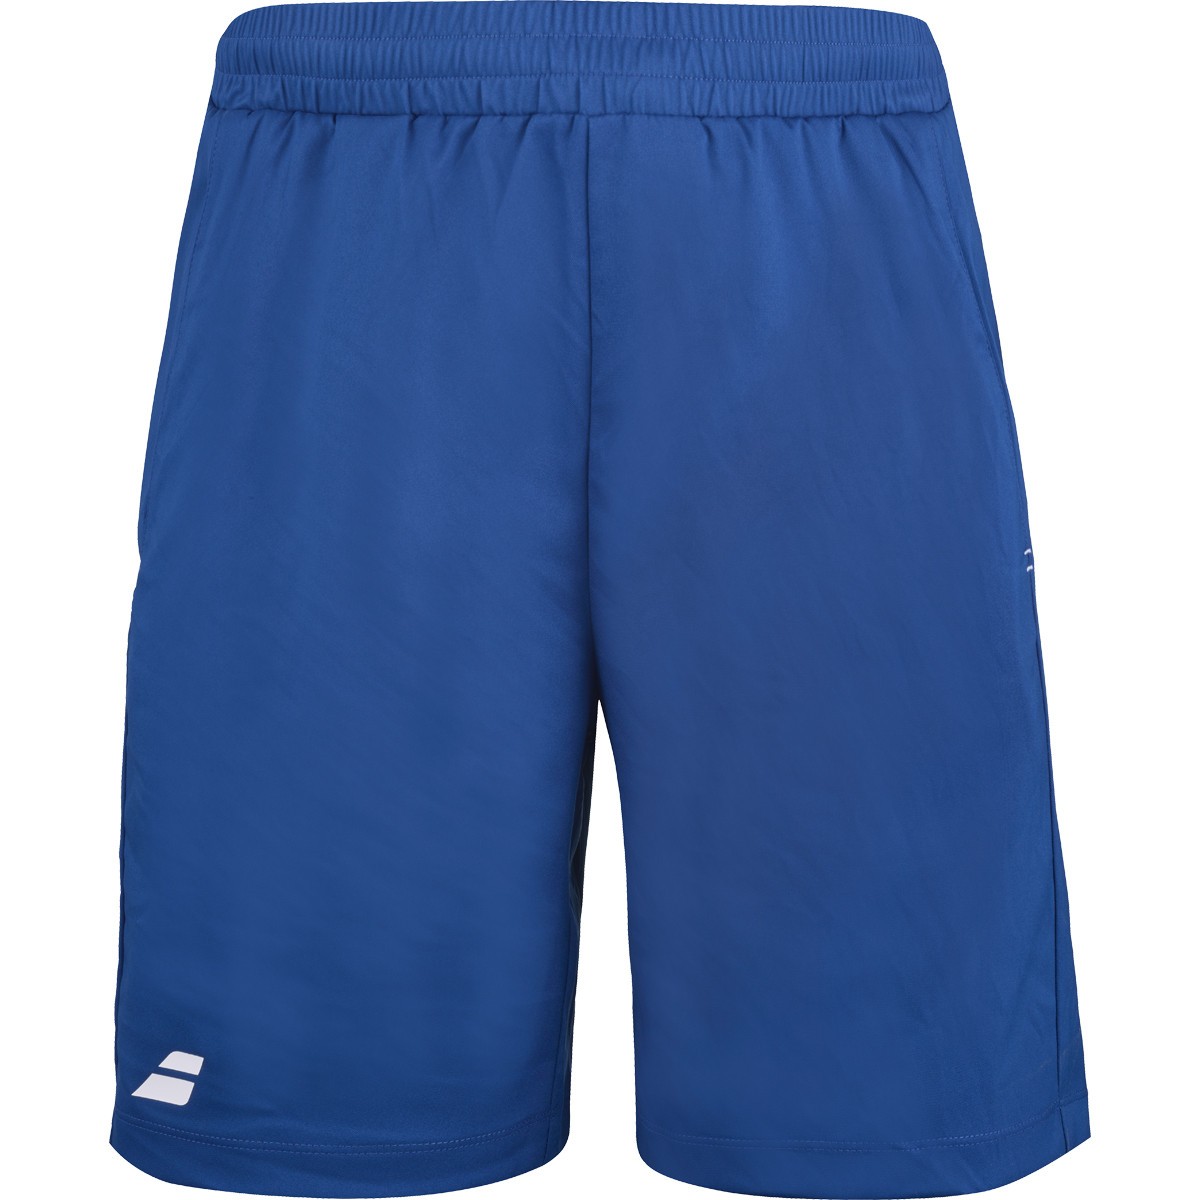 Теннисные шорты мужские Babolat Play Short Men sodalite blue/white